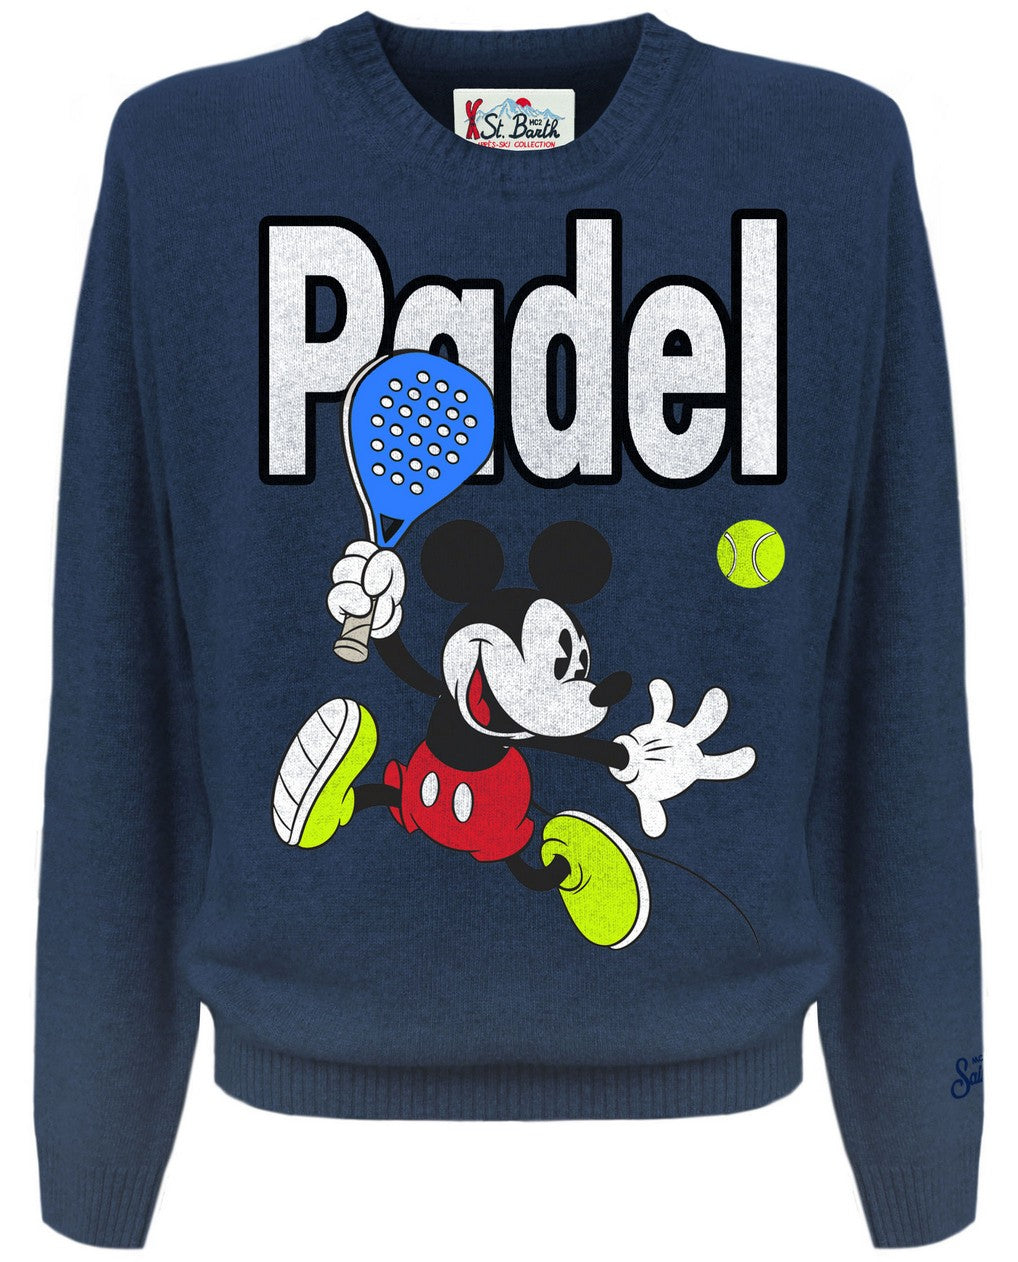 Heron Mickey Padel Men's Sweater